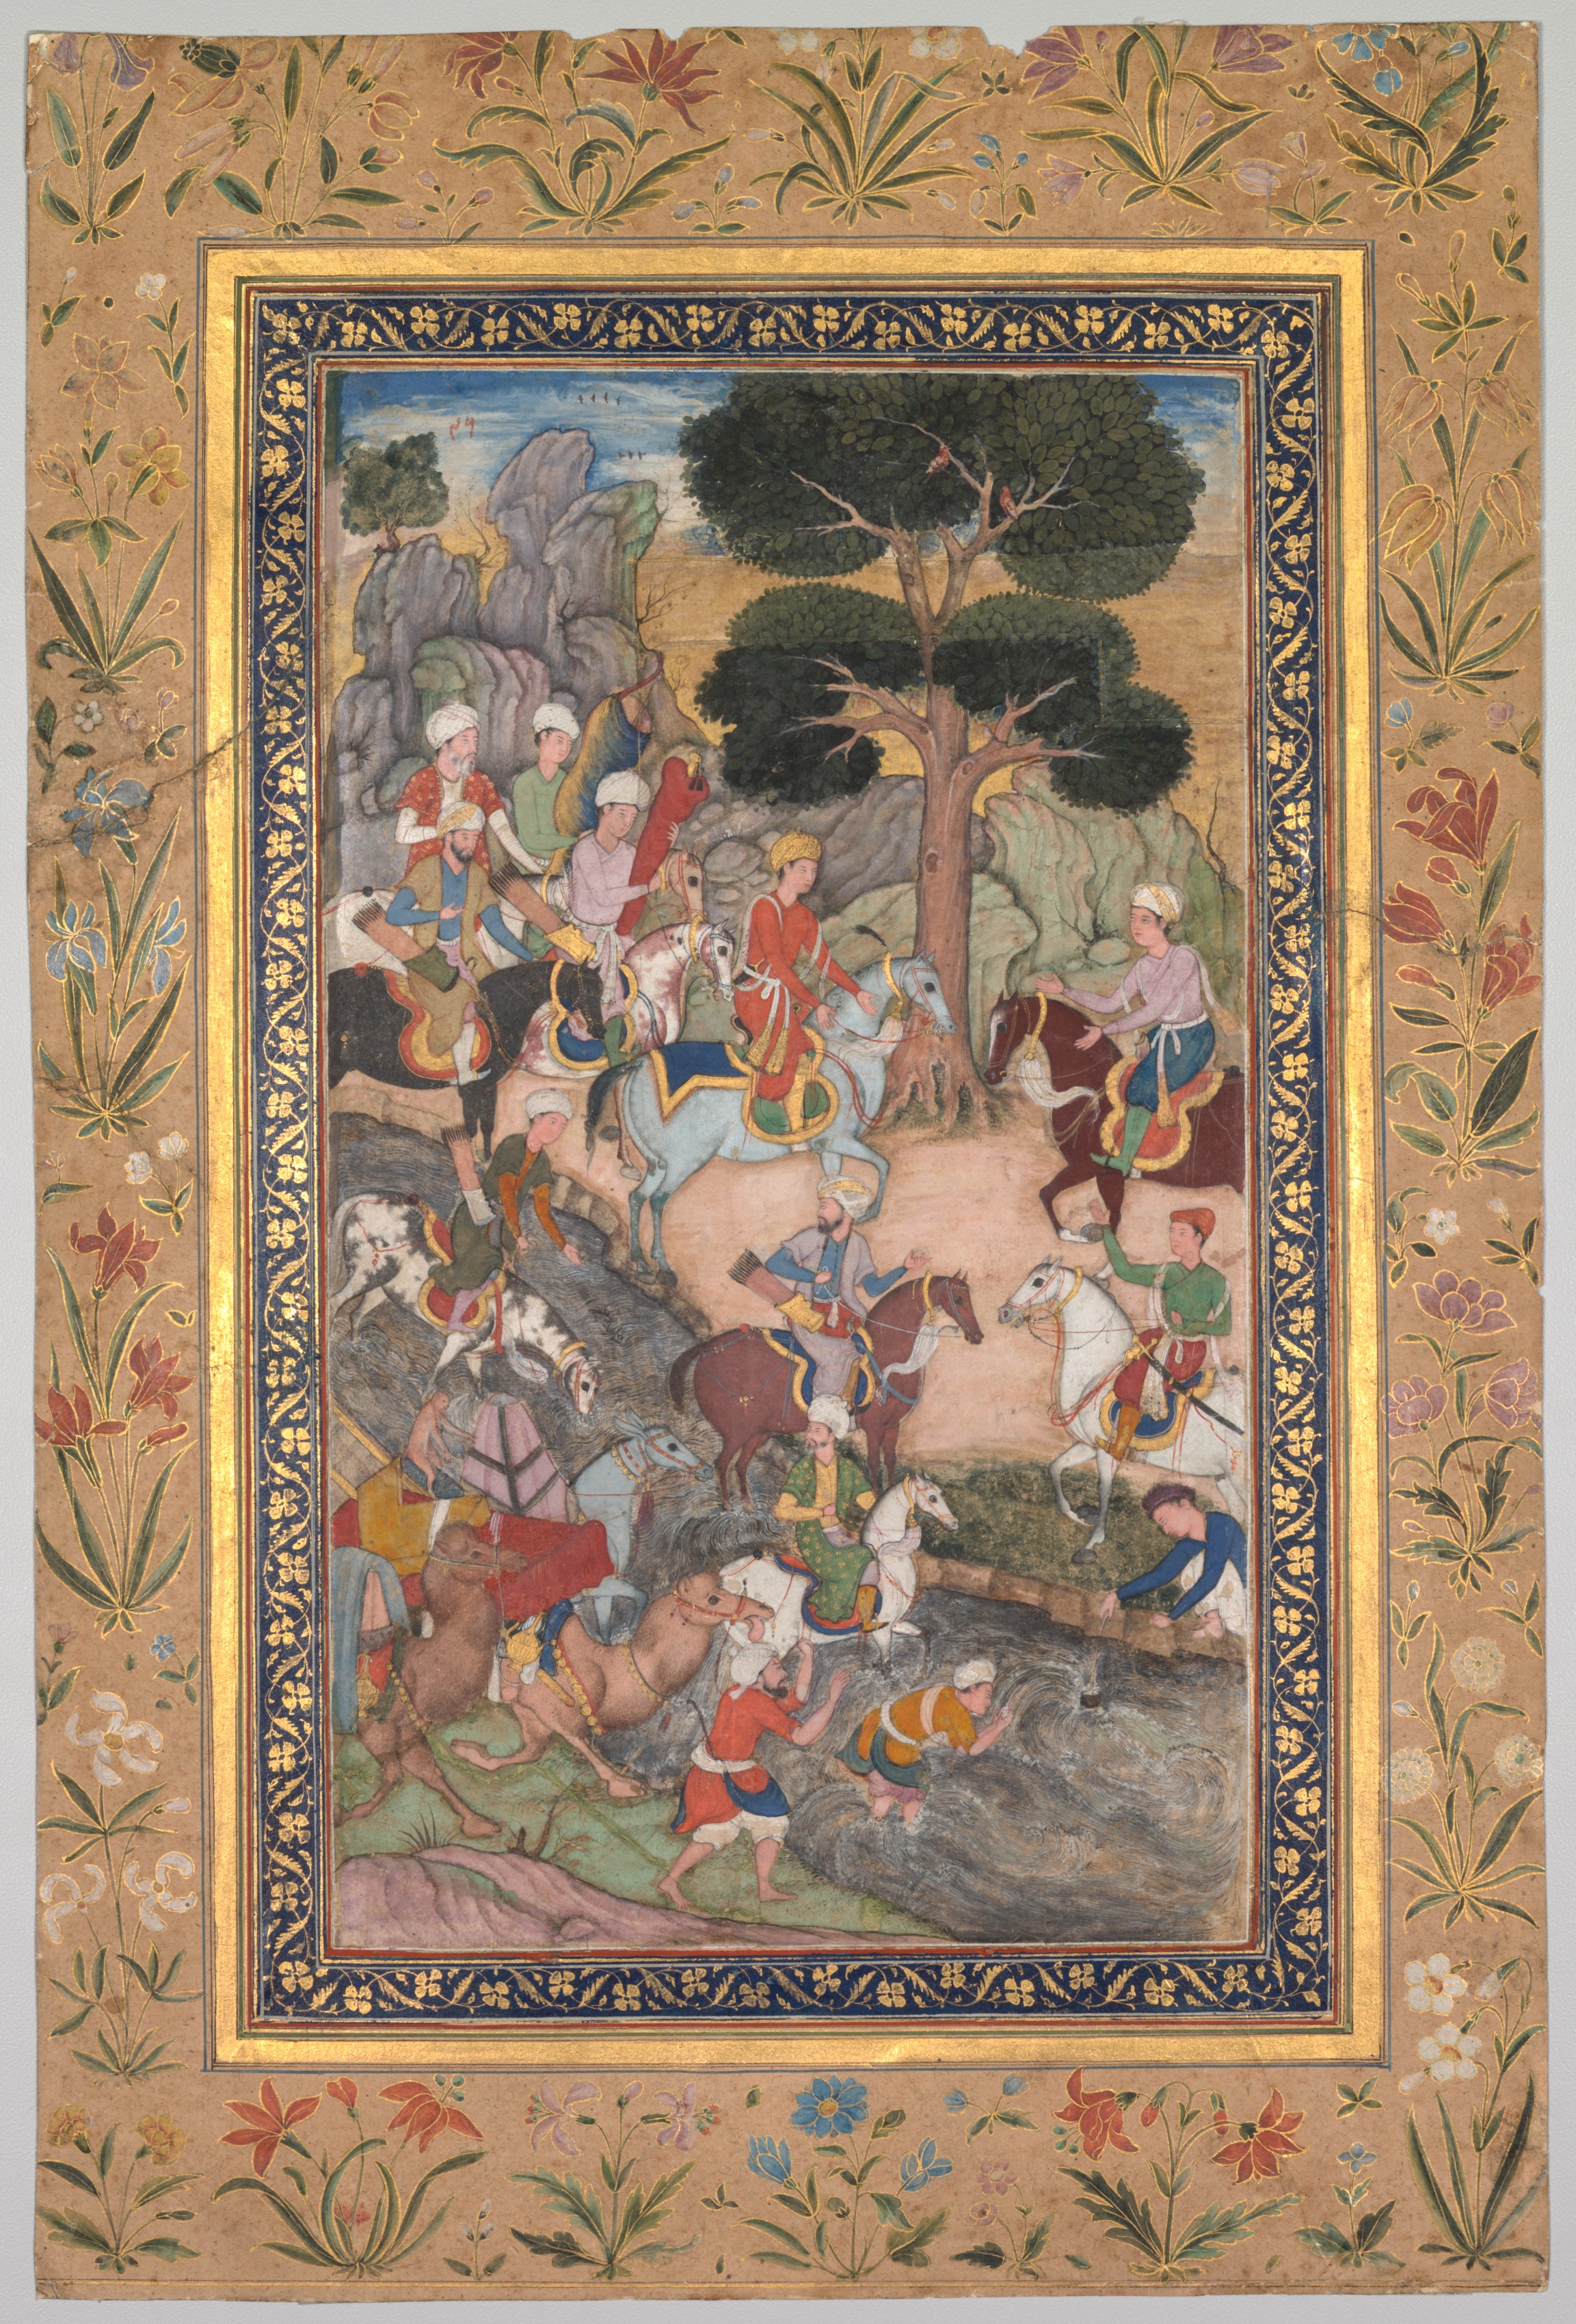 Babur meeting with Sultan Ali Mirza at the Kohik River, from a Babur-nama (Memoirs of Babur)